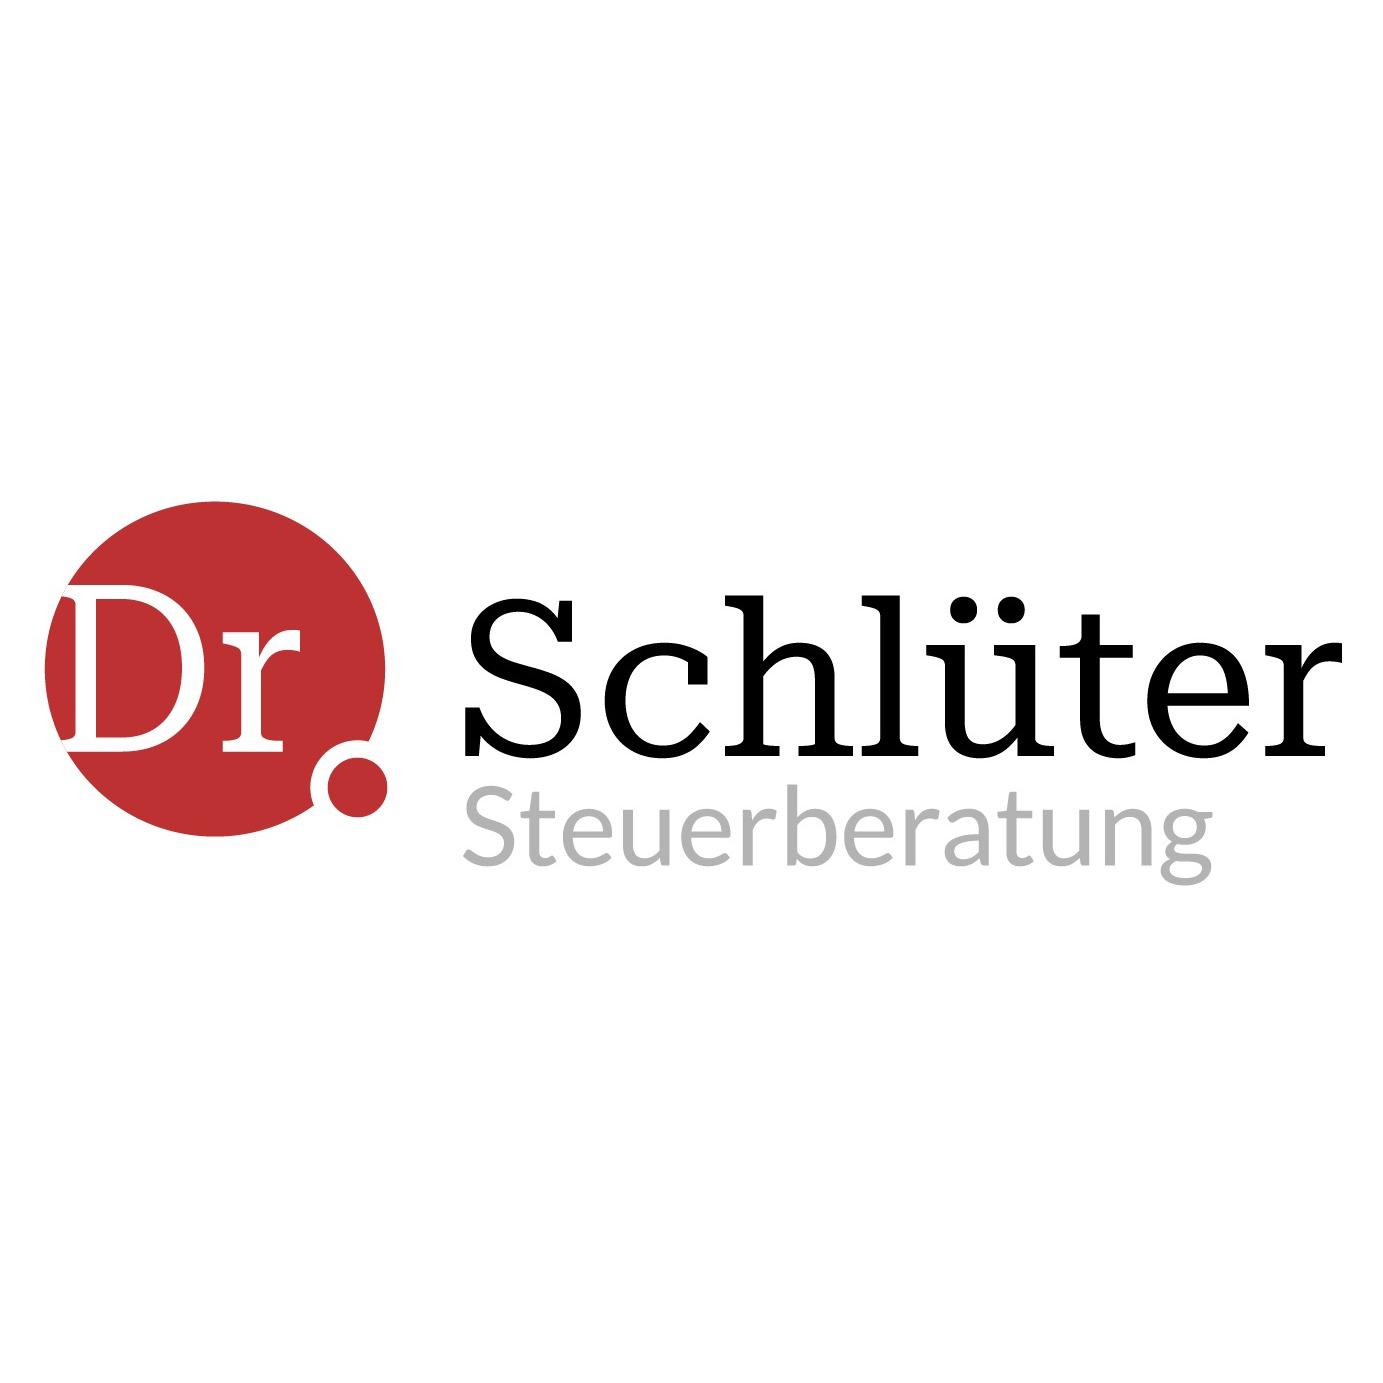 Dr. Schlüter Steuerberatungsgesellschaft mbH - Tax Consultant - Münster - 0251 414960 Germany | ShowMeLocal.com